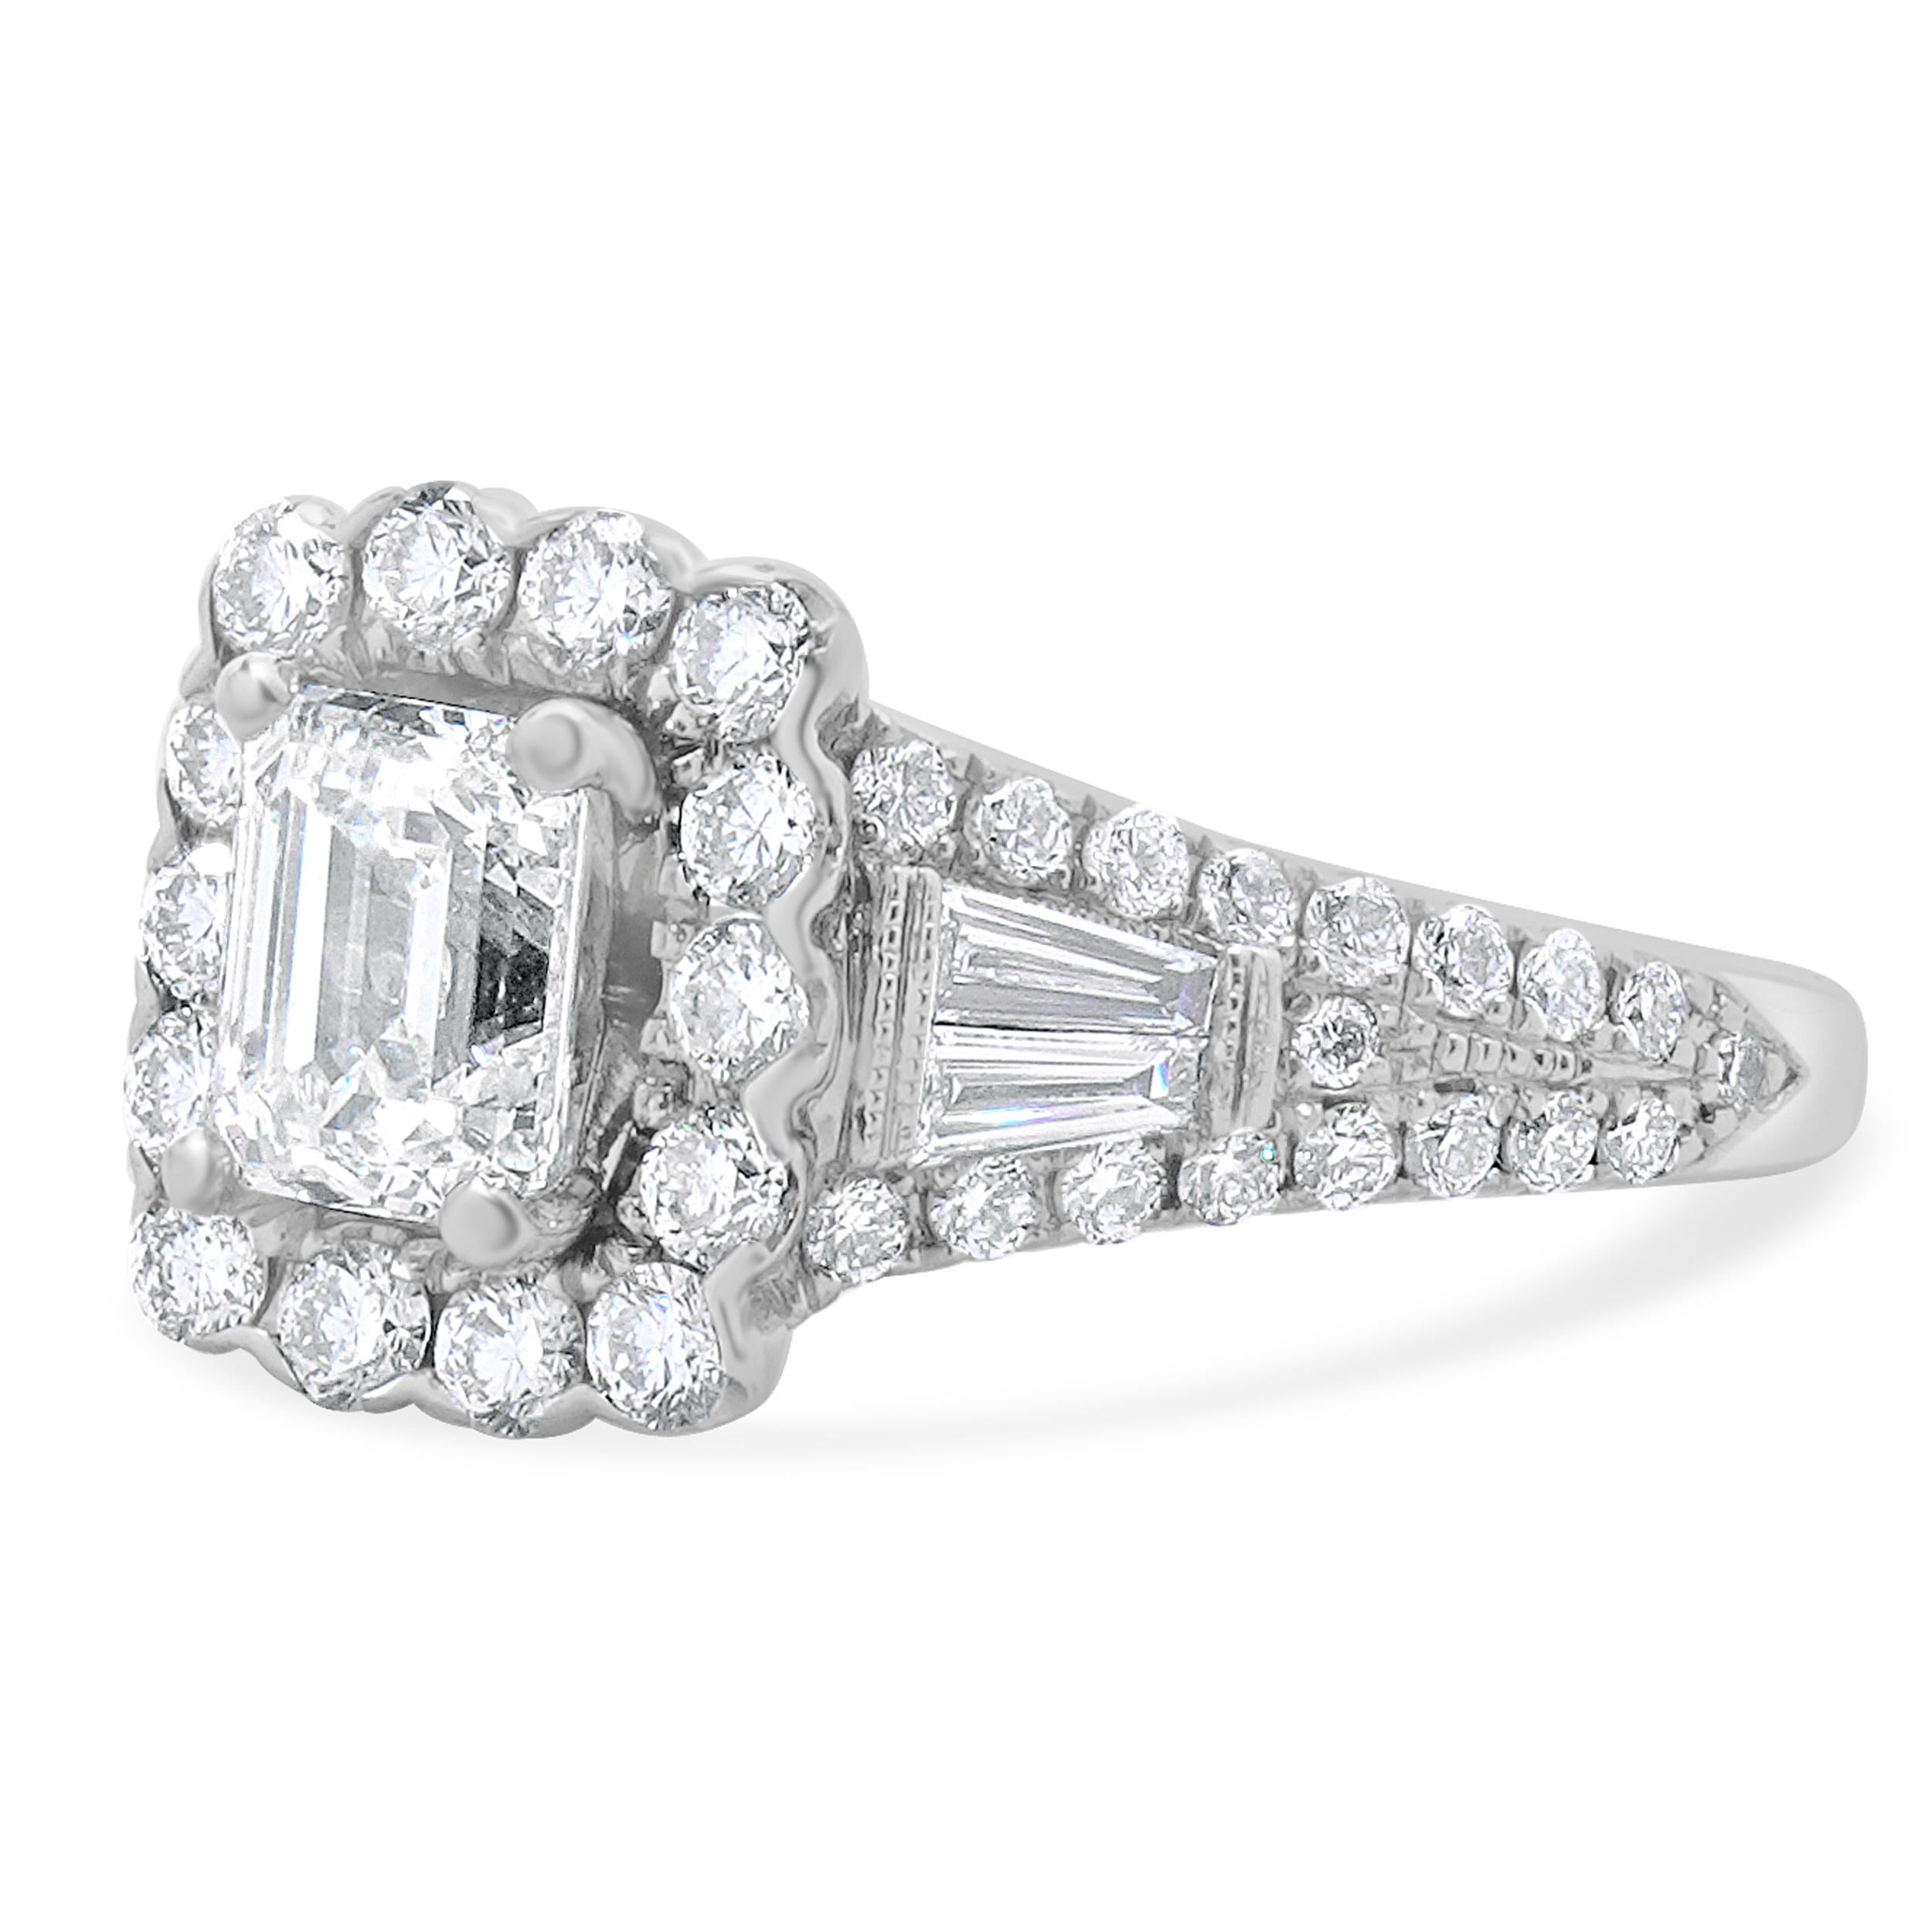 Designer: Neil Lane
Material: 14K white gold
Diamond:  1 Emerald cut = 1.00ct
Color: I
Clarity: SI1
Diamond:  4 baguette cut = 0.04cttw
Color: I
Clarity: I1
Diamond:  54 round brilliant cut = 0.85cttw
Color: I
Clarity: I1
Dimensions: ring top